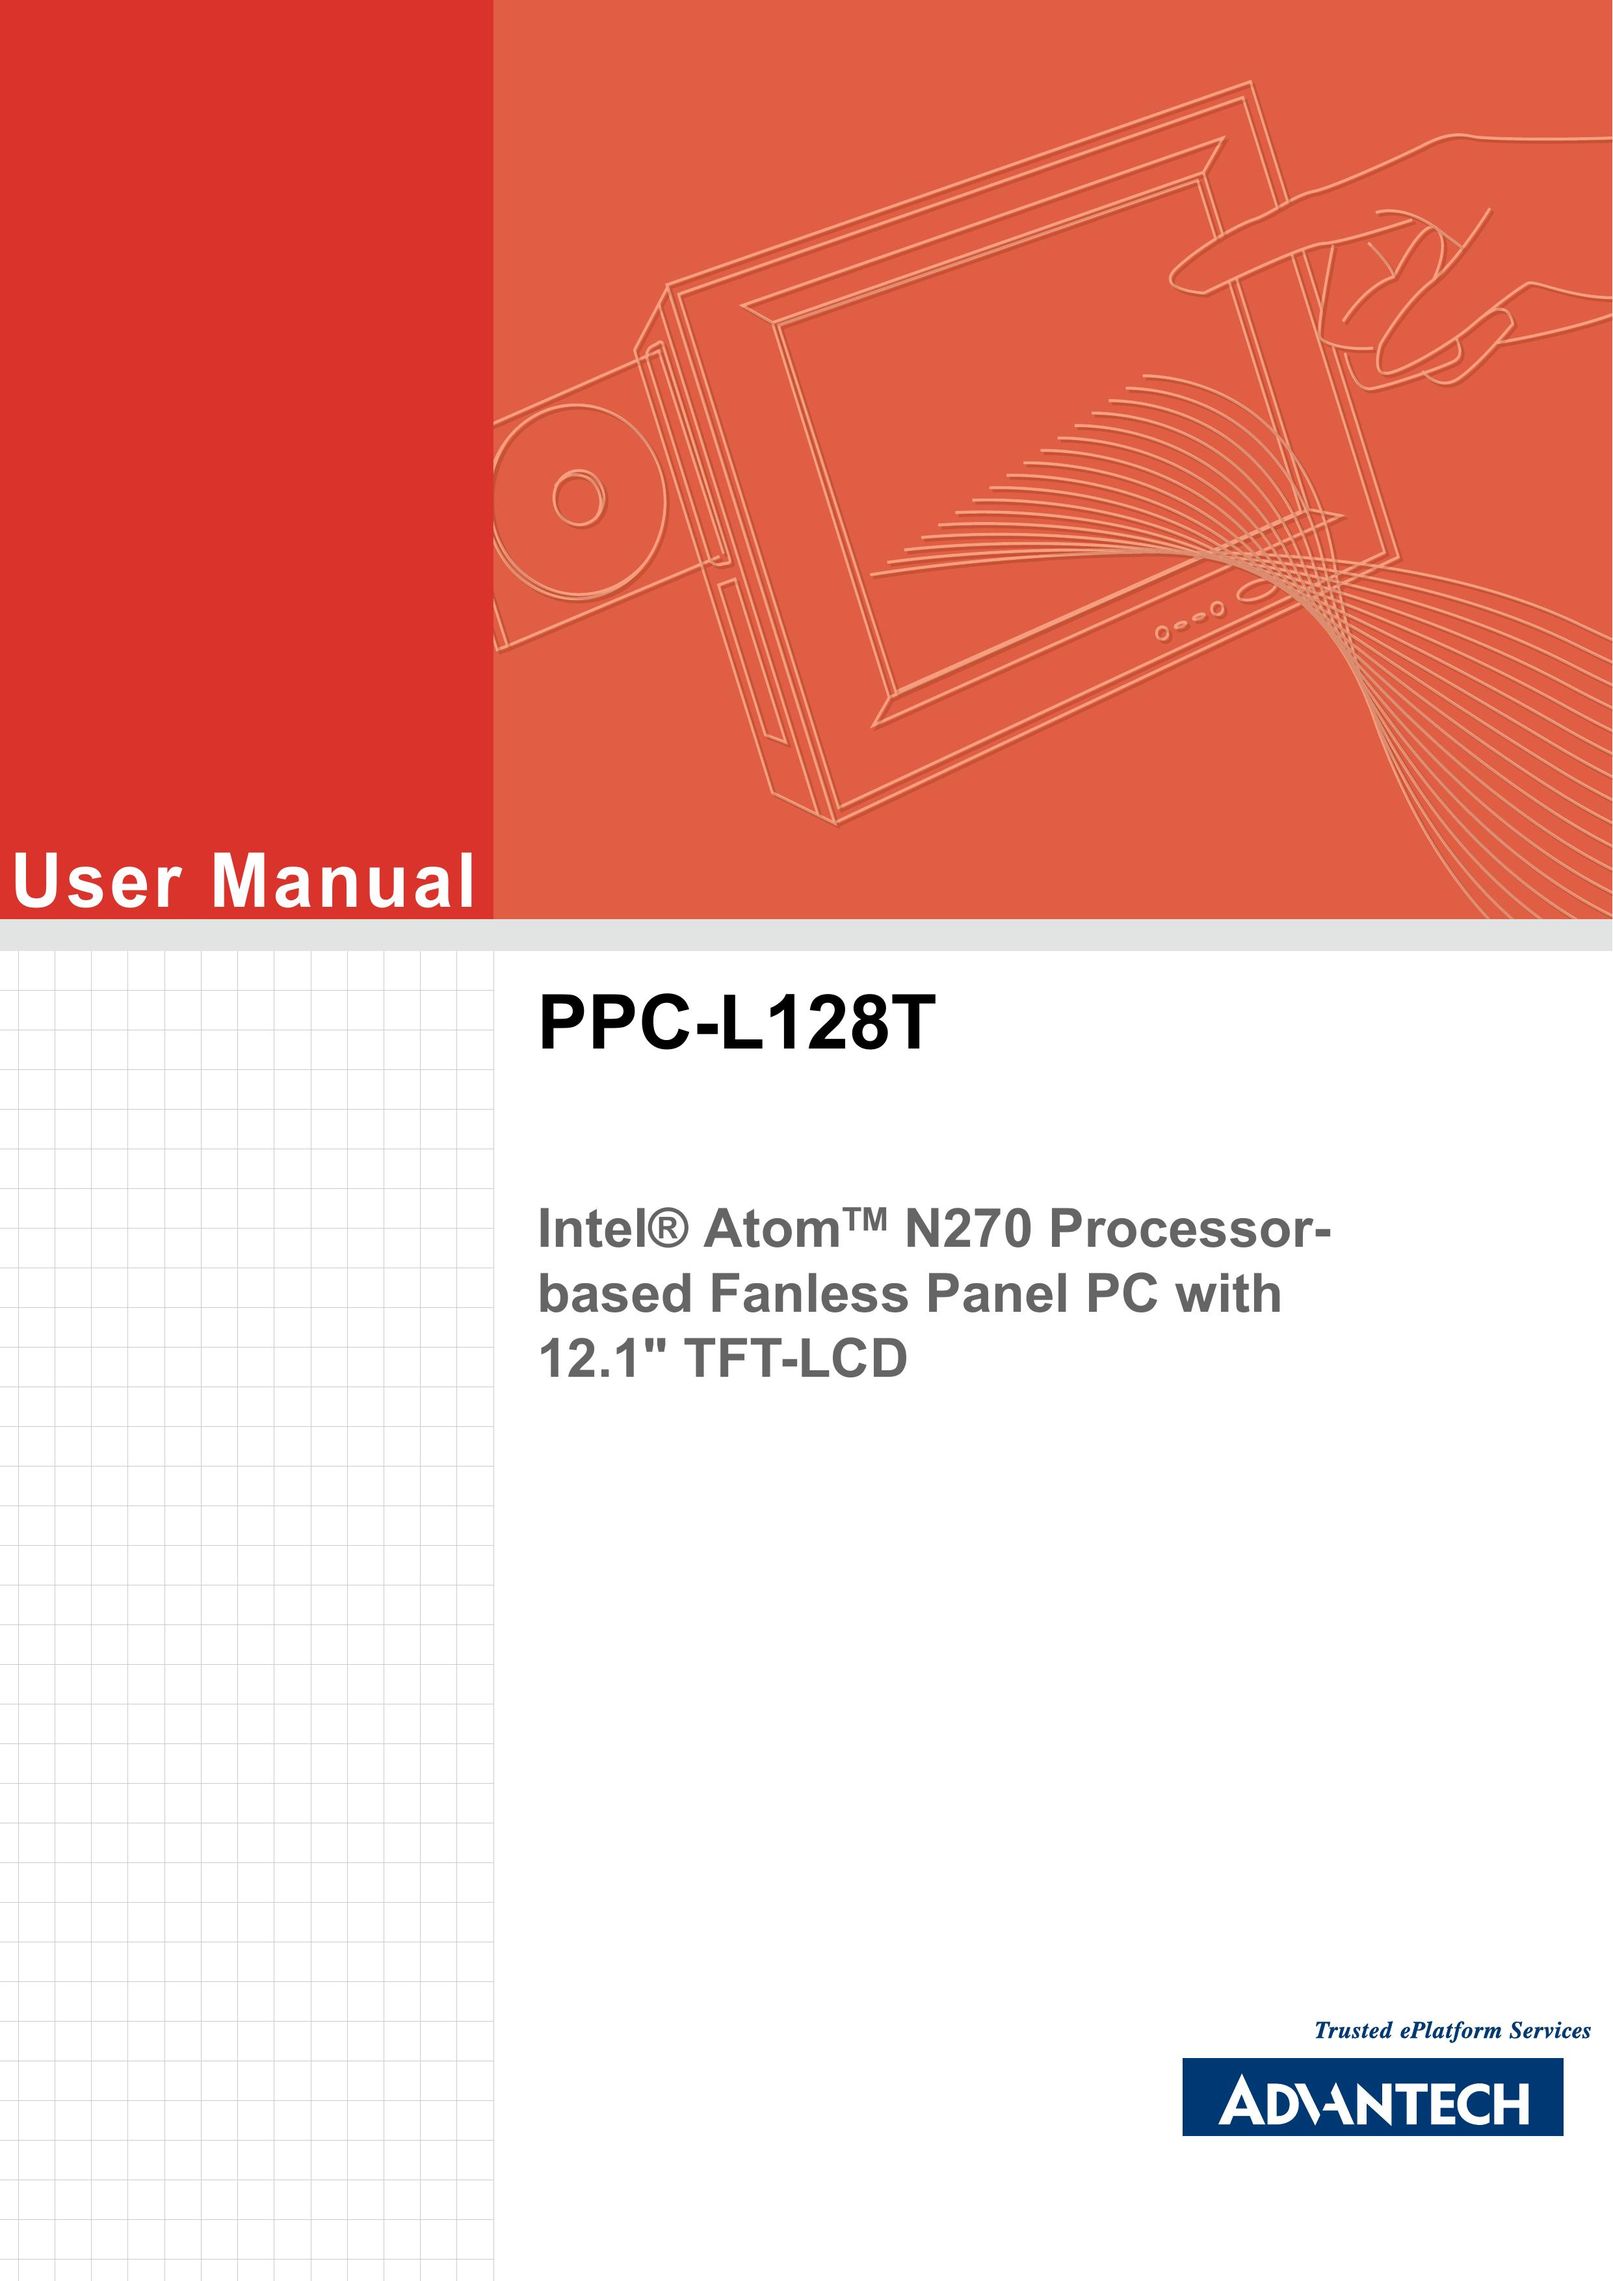 Advantech PPC-L128T Personal Computer User Manual